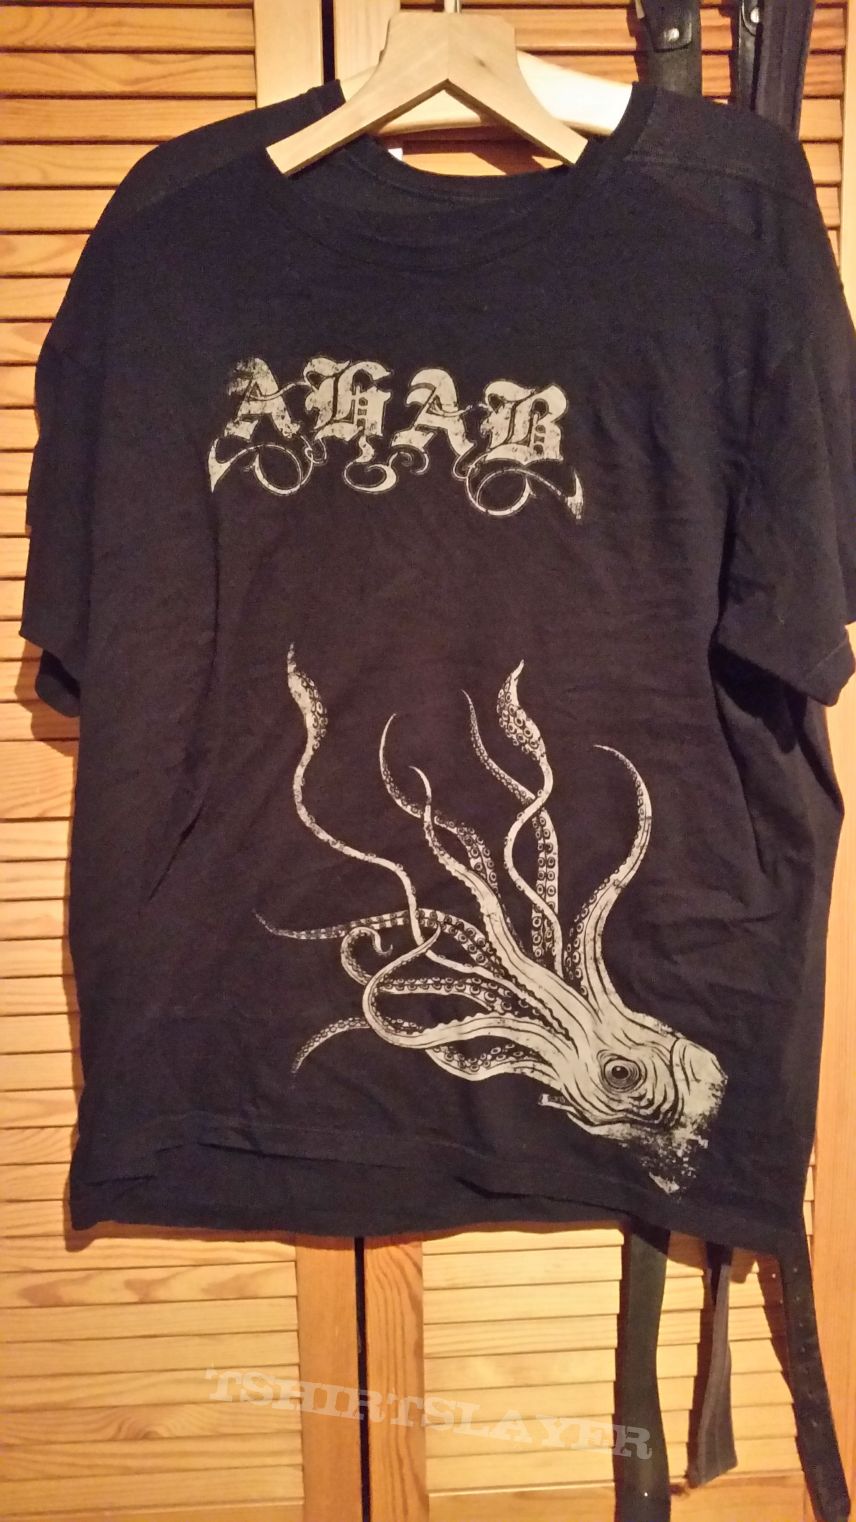 Ahab - Octopus T-Shirt 